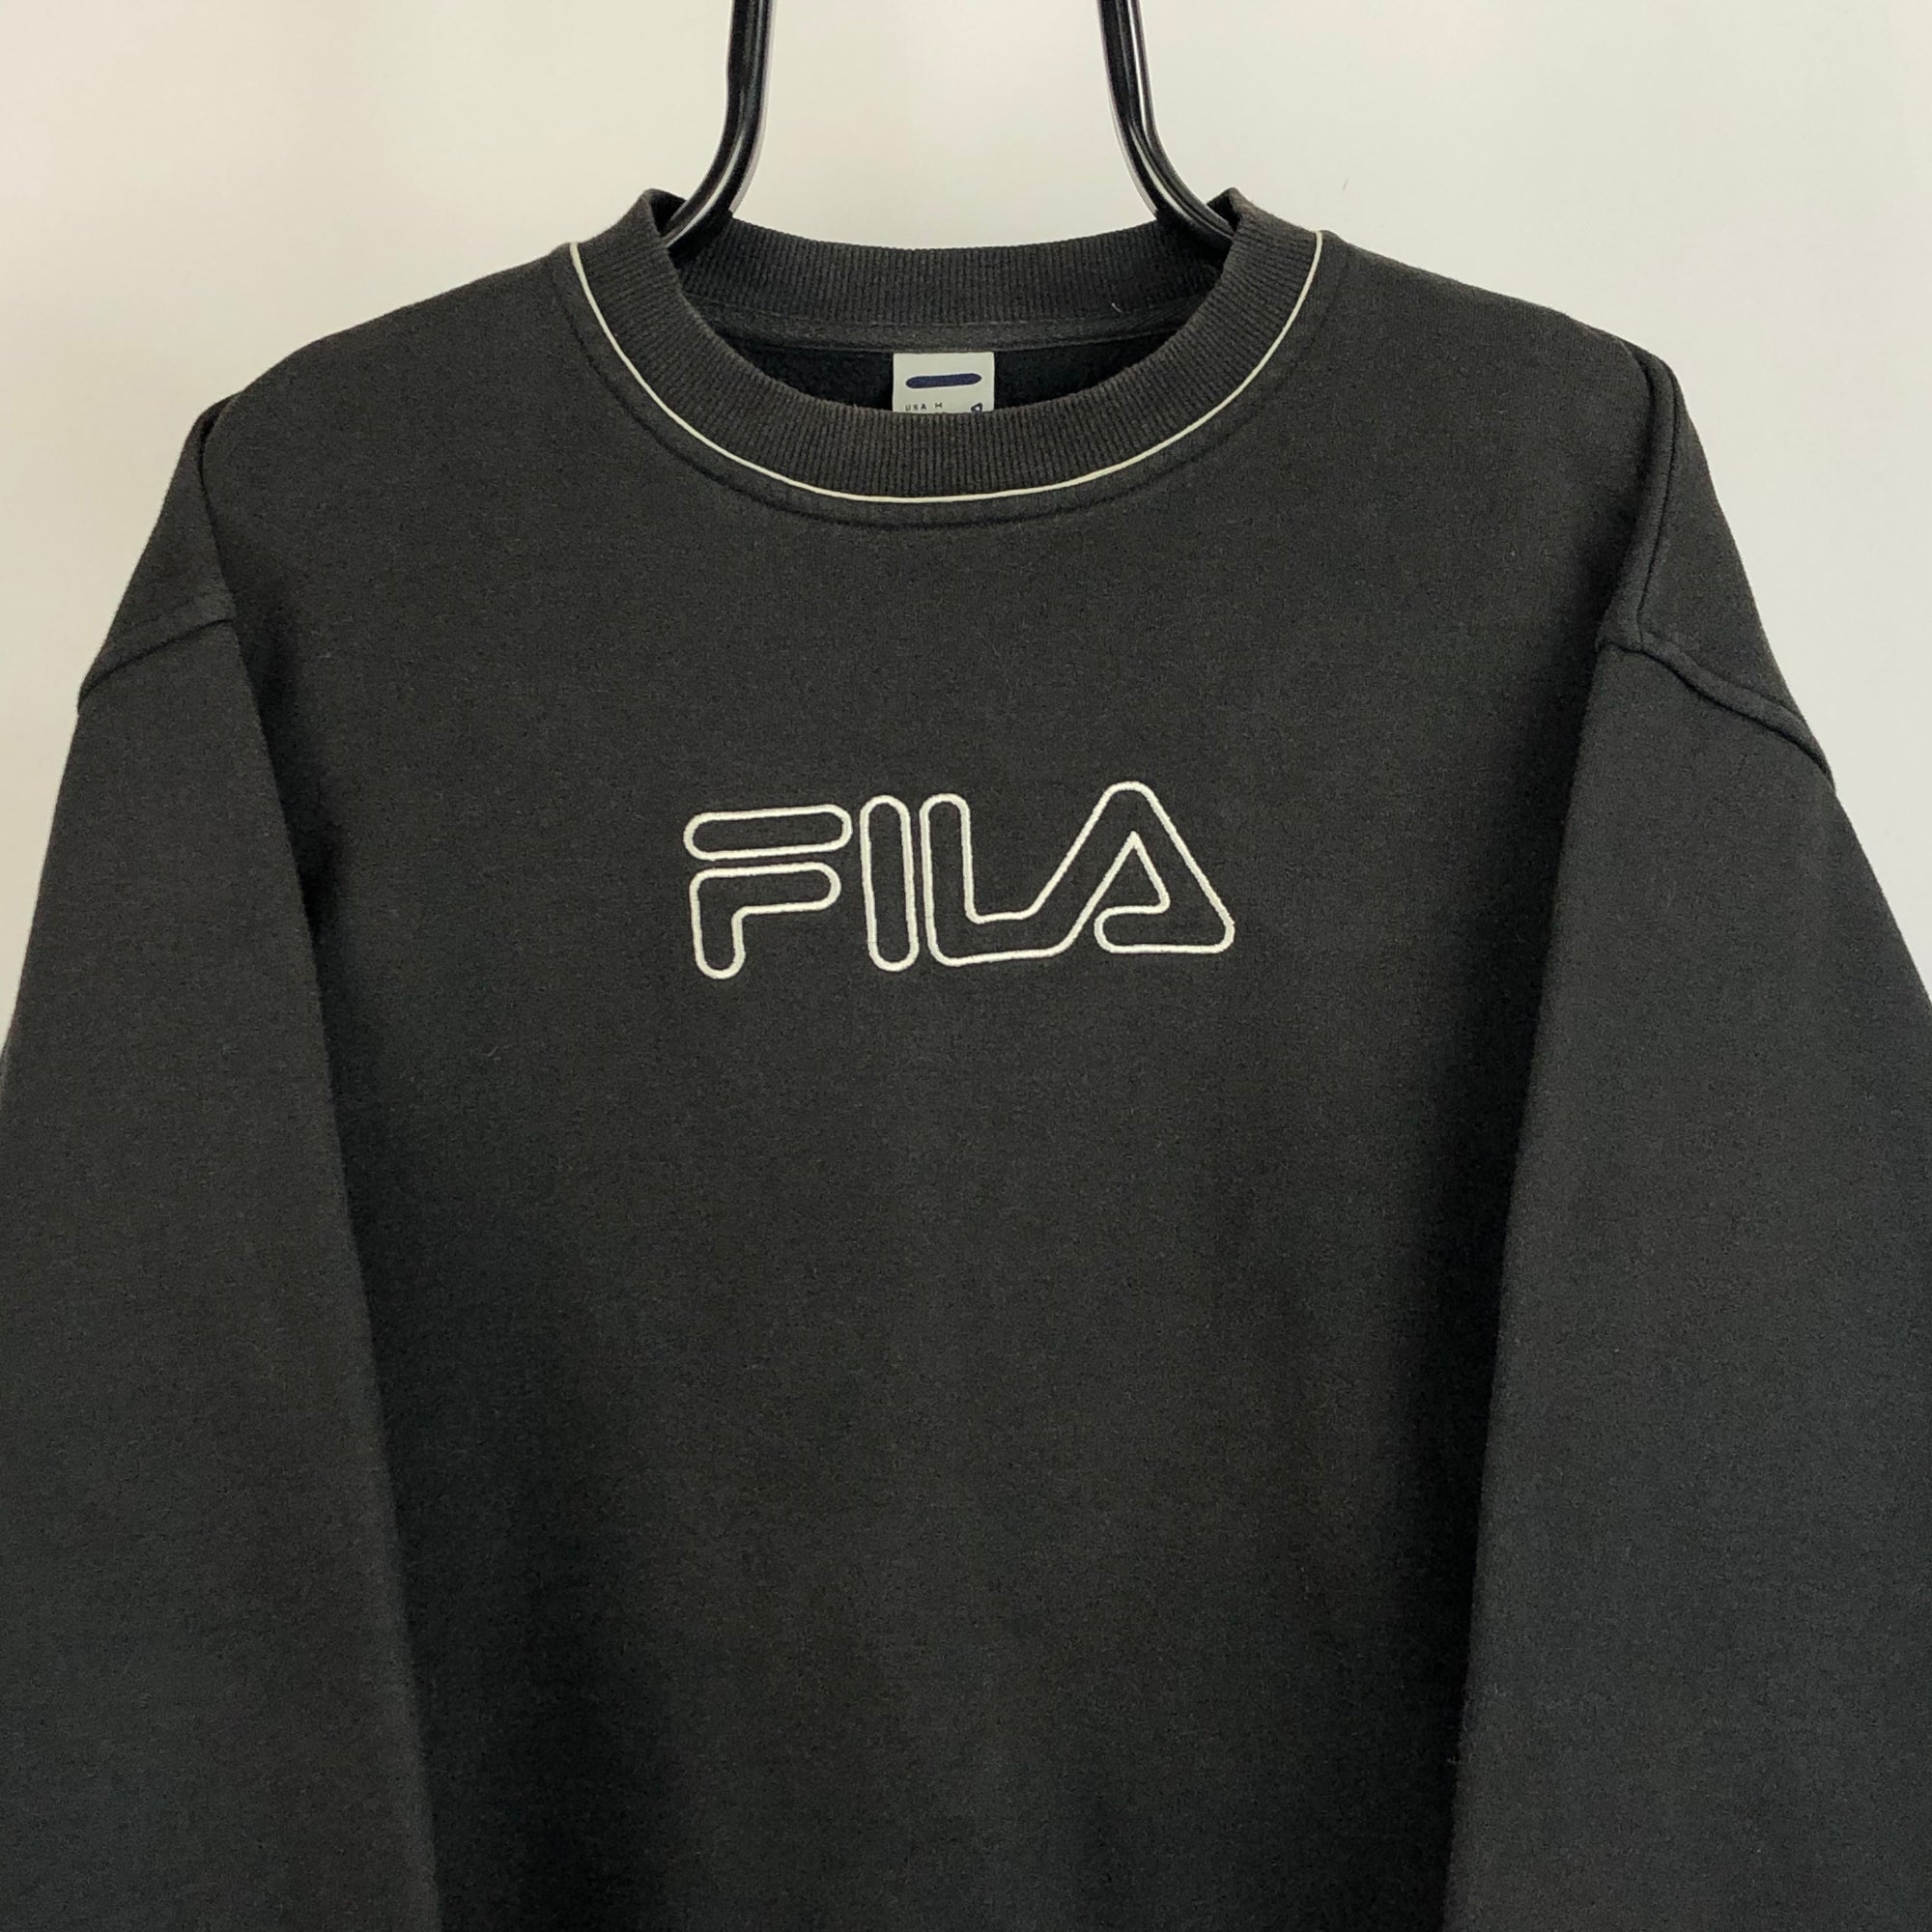 Vintage Fila Spellout Sweatshirt in Black - Men’s Medium/Women’s Large